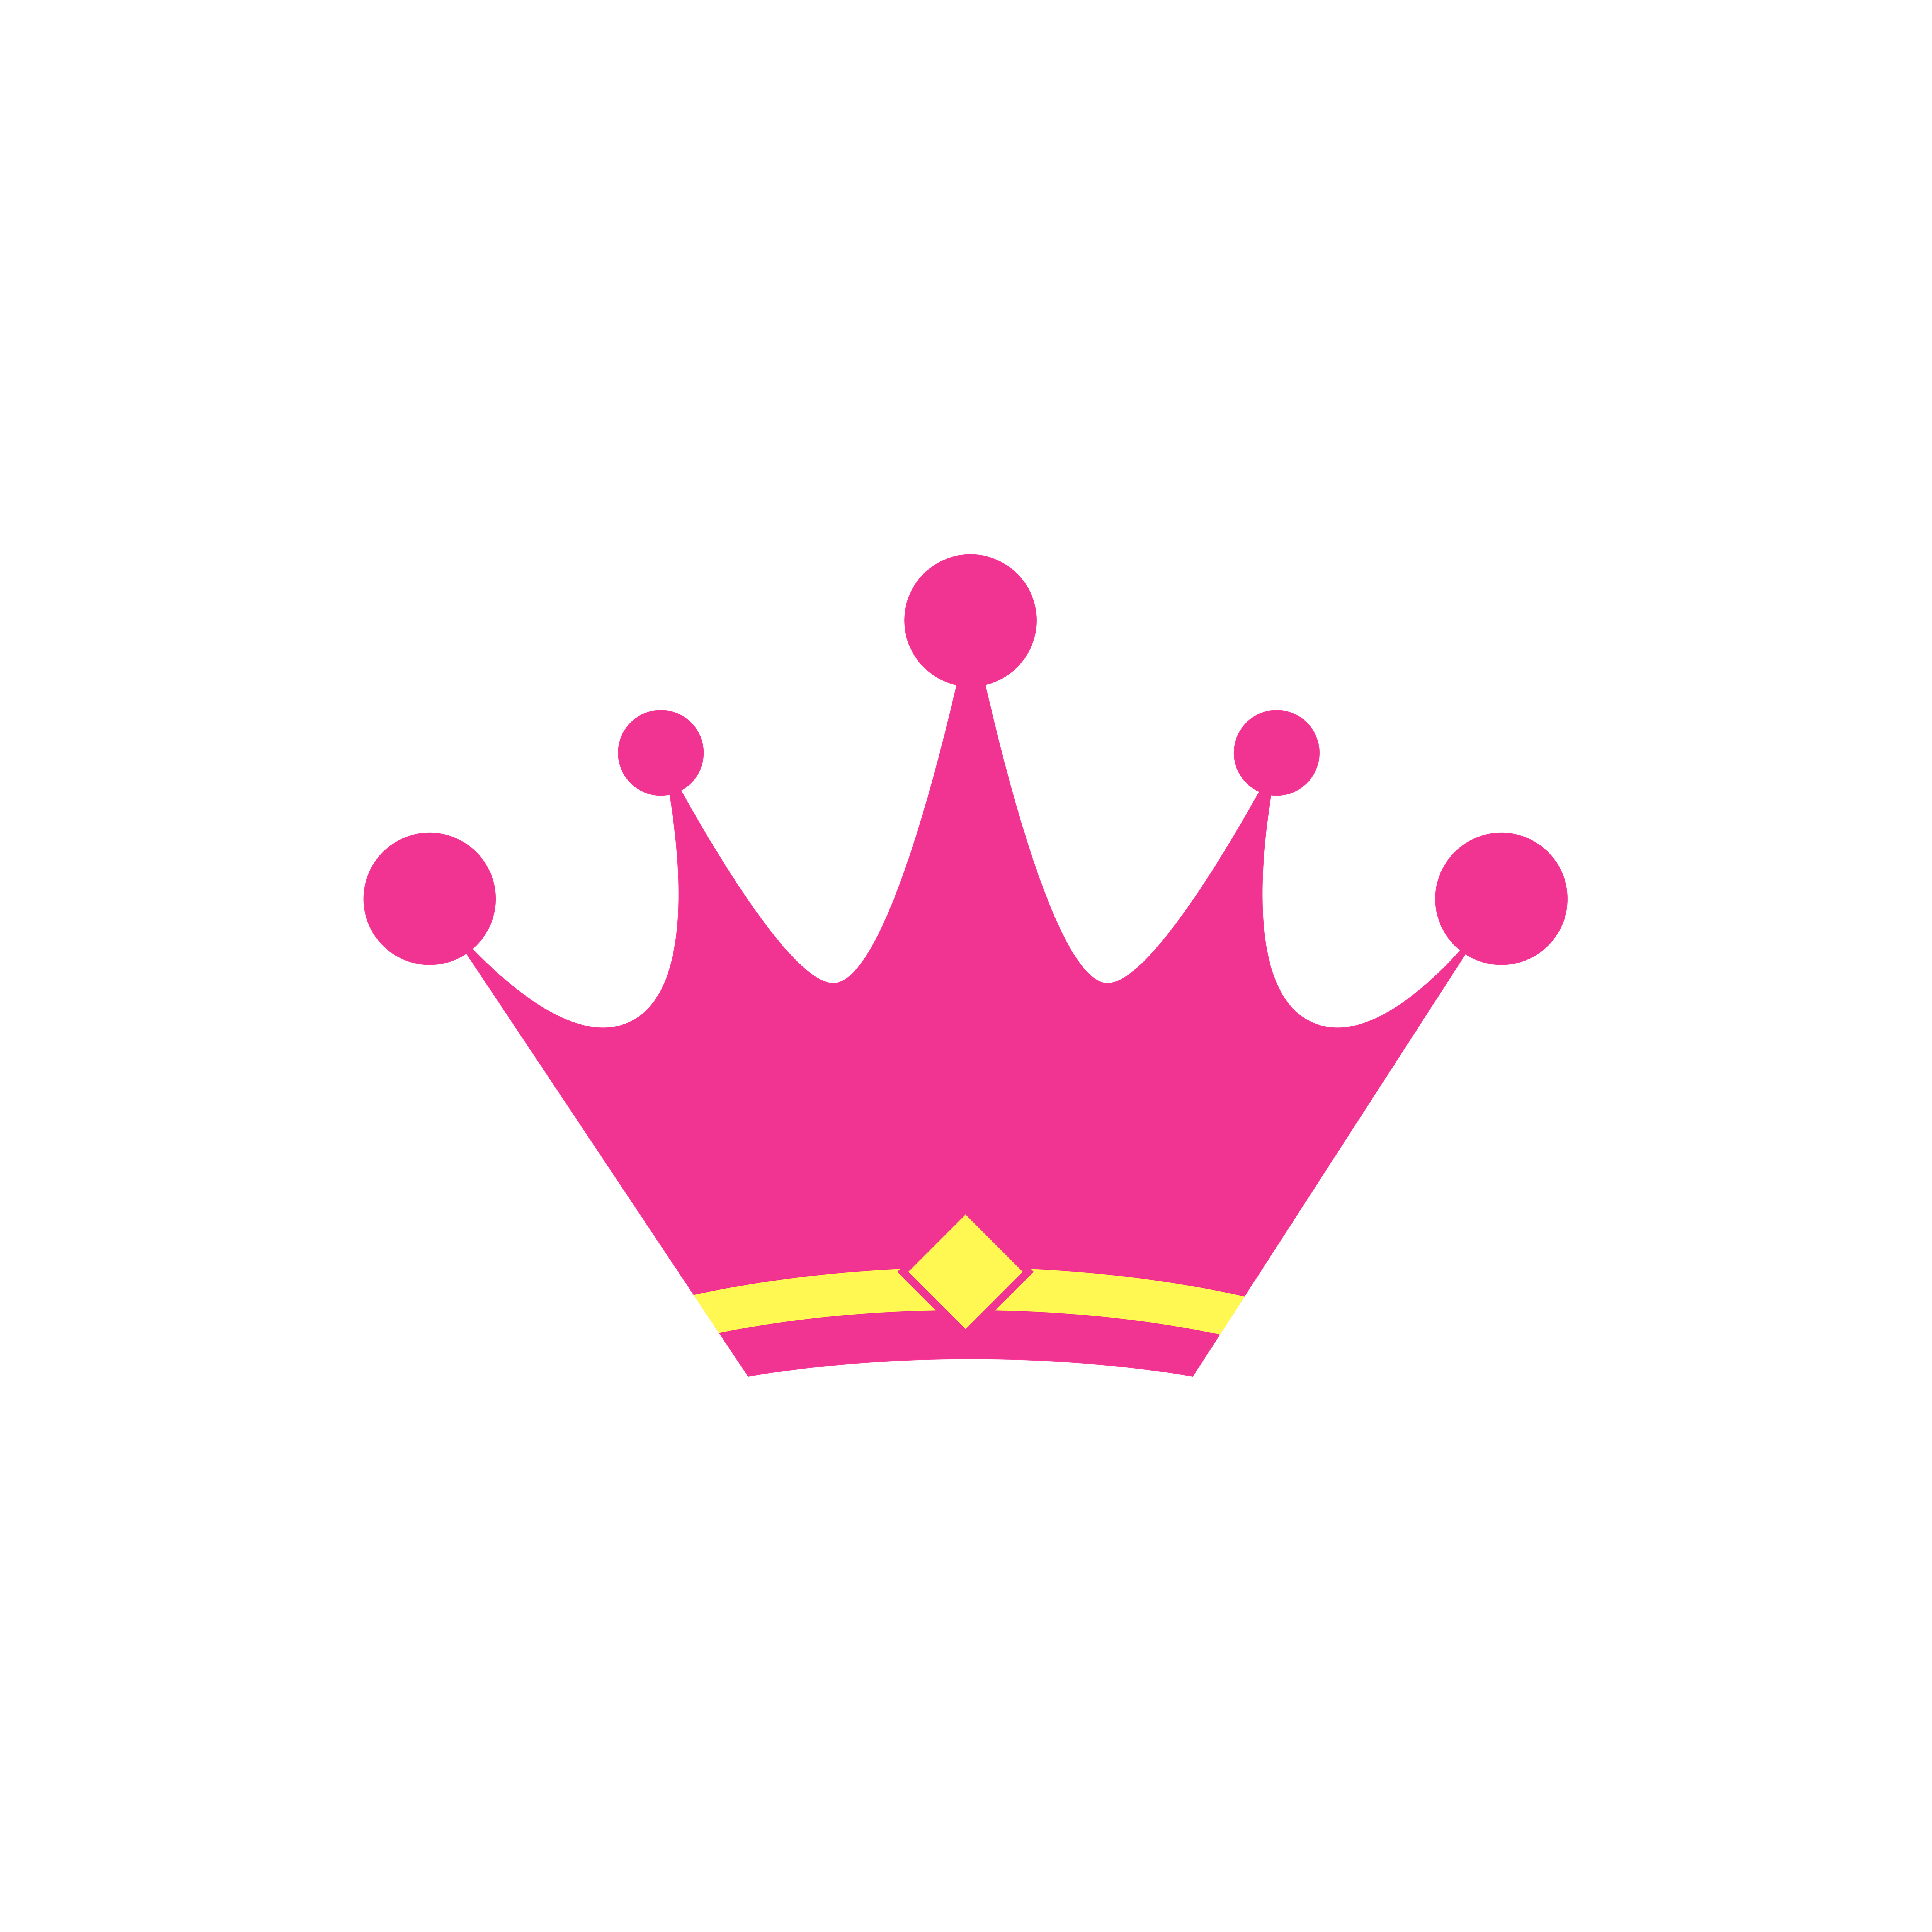 Download Princess Crown Png Image | PNG & GIF BASE